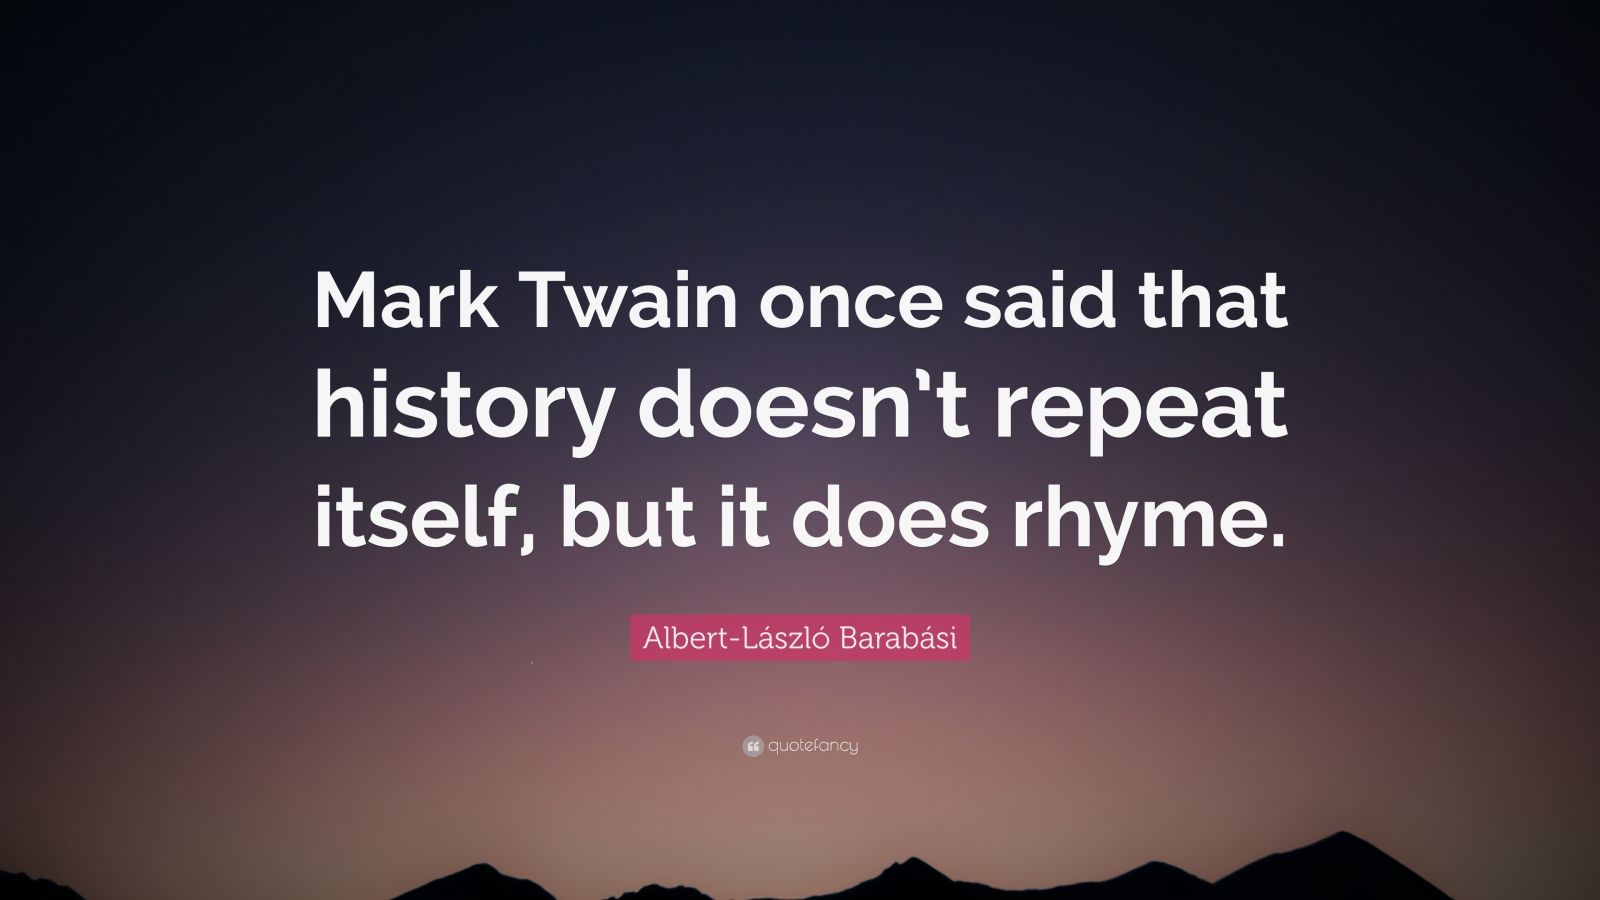 Albert László Barabási Quote “mark Twain Once Said That History Doesn